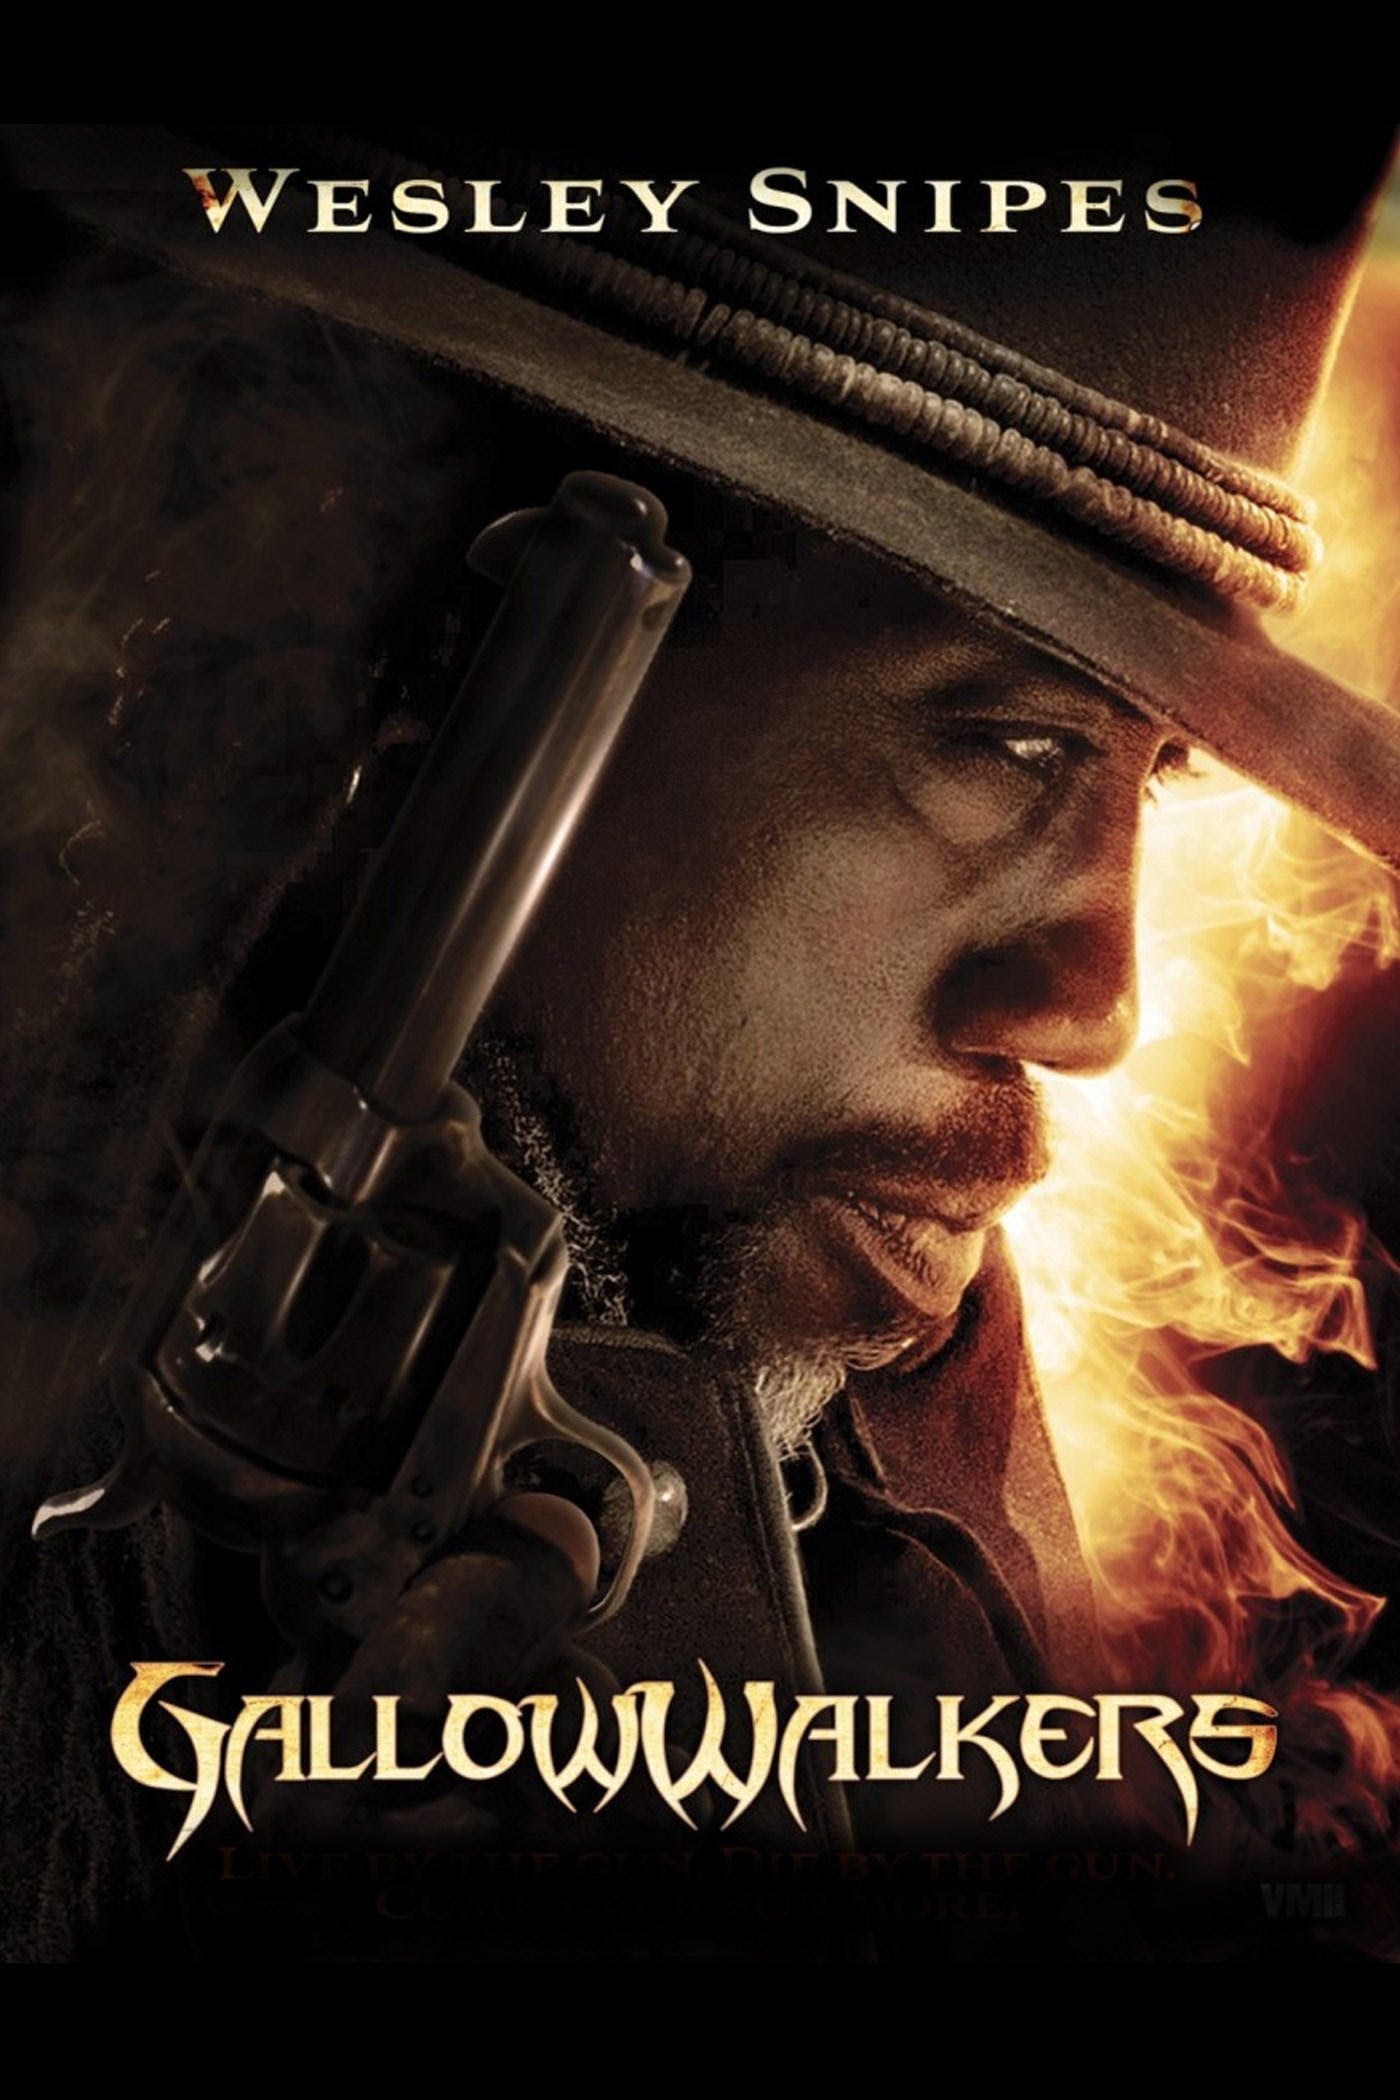 Gallowwalkers [HD] (2012)